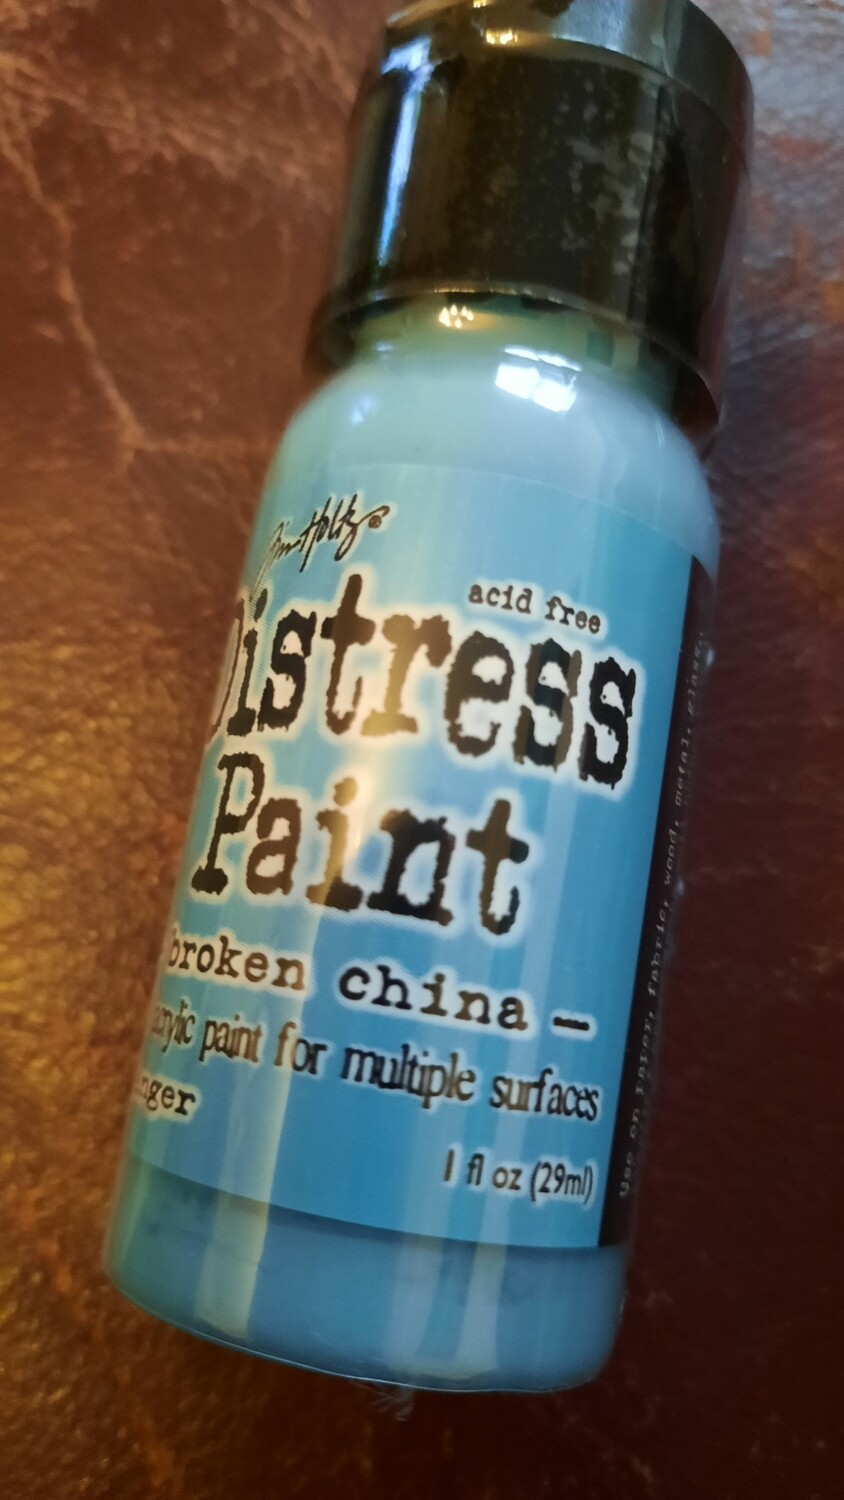 Broken china Distress Paint